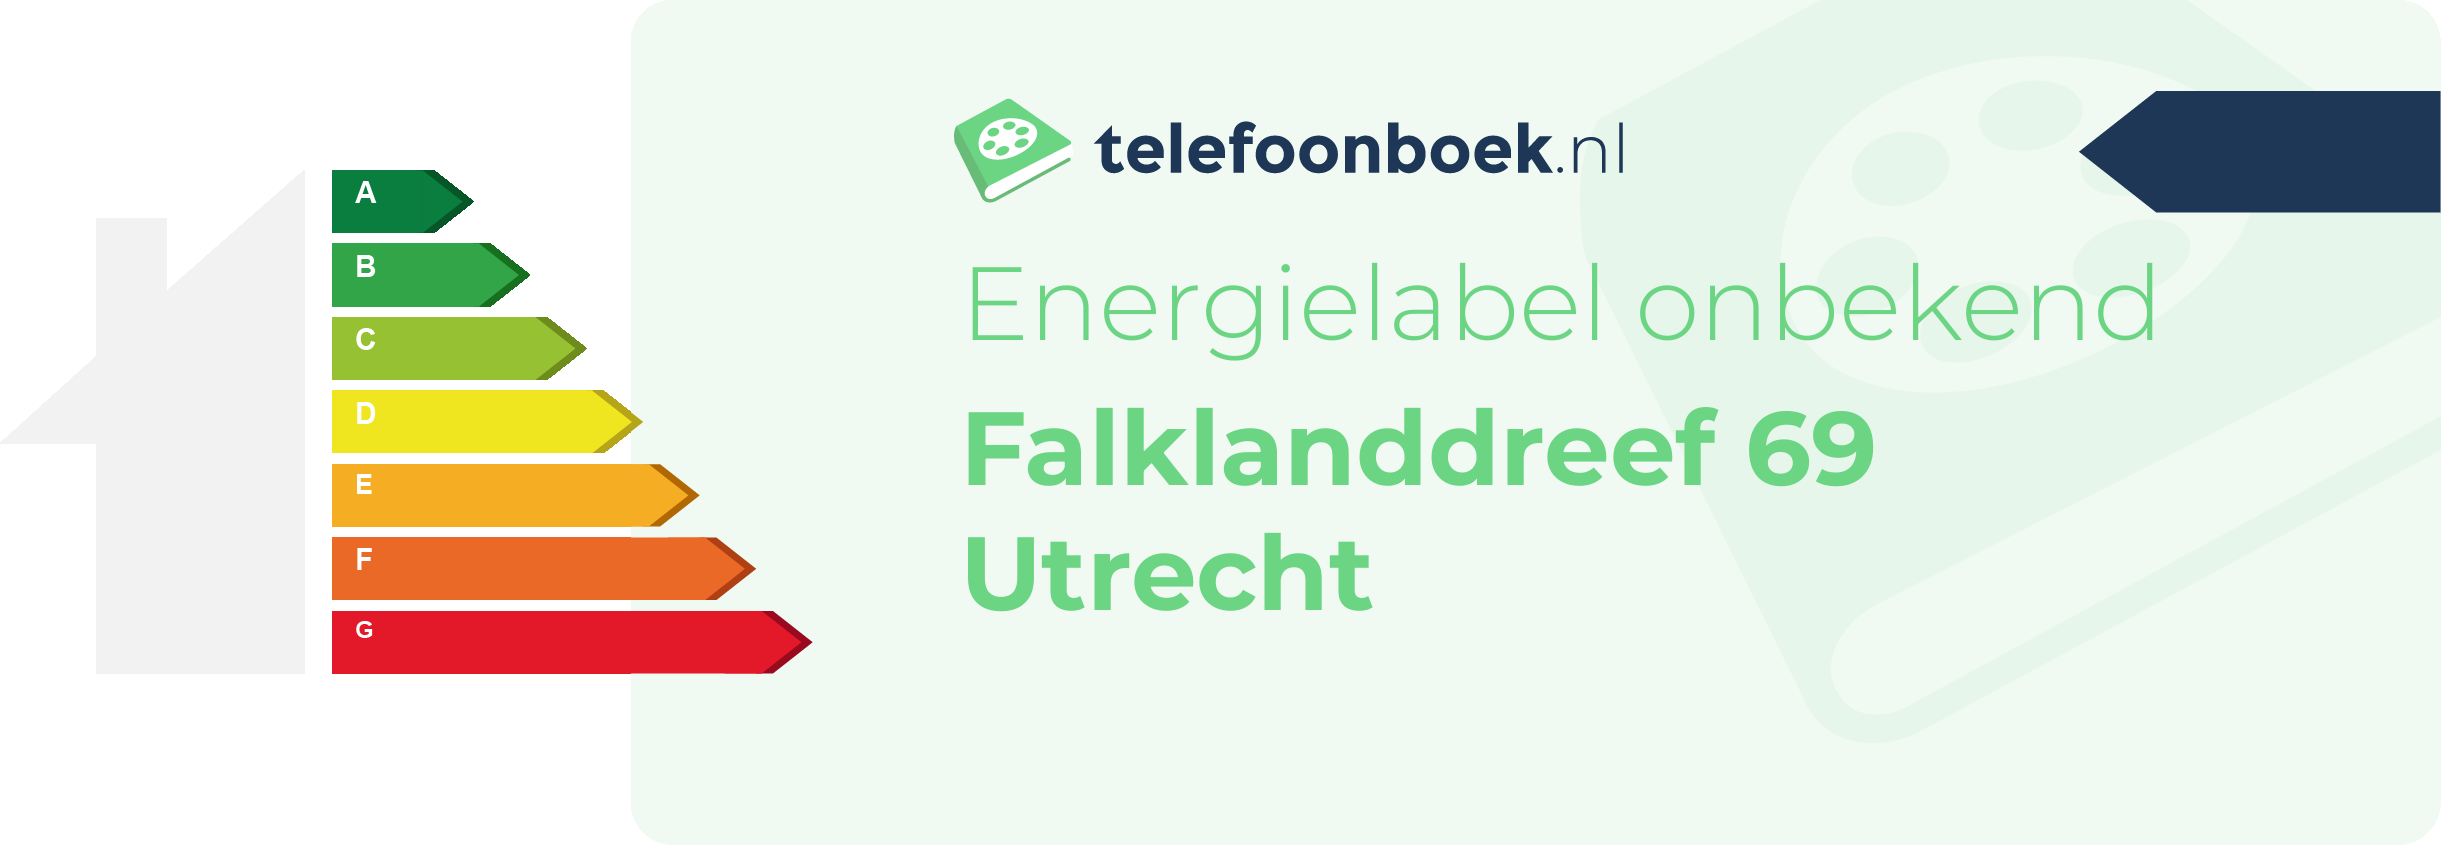 Energielabel Falklanddreef 69 Utrecht